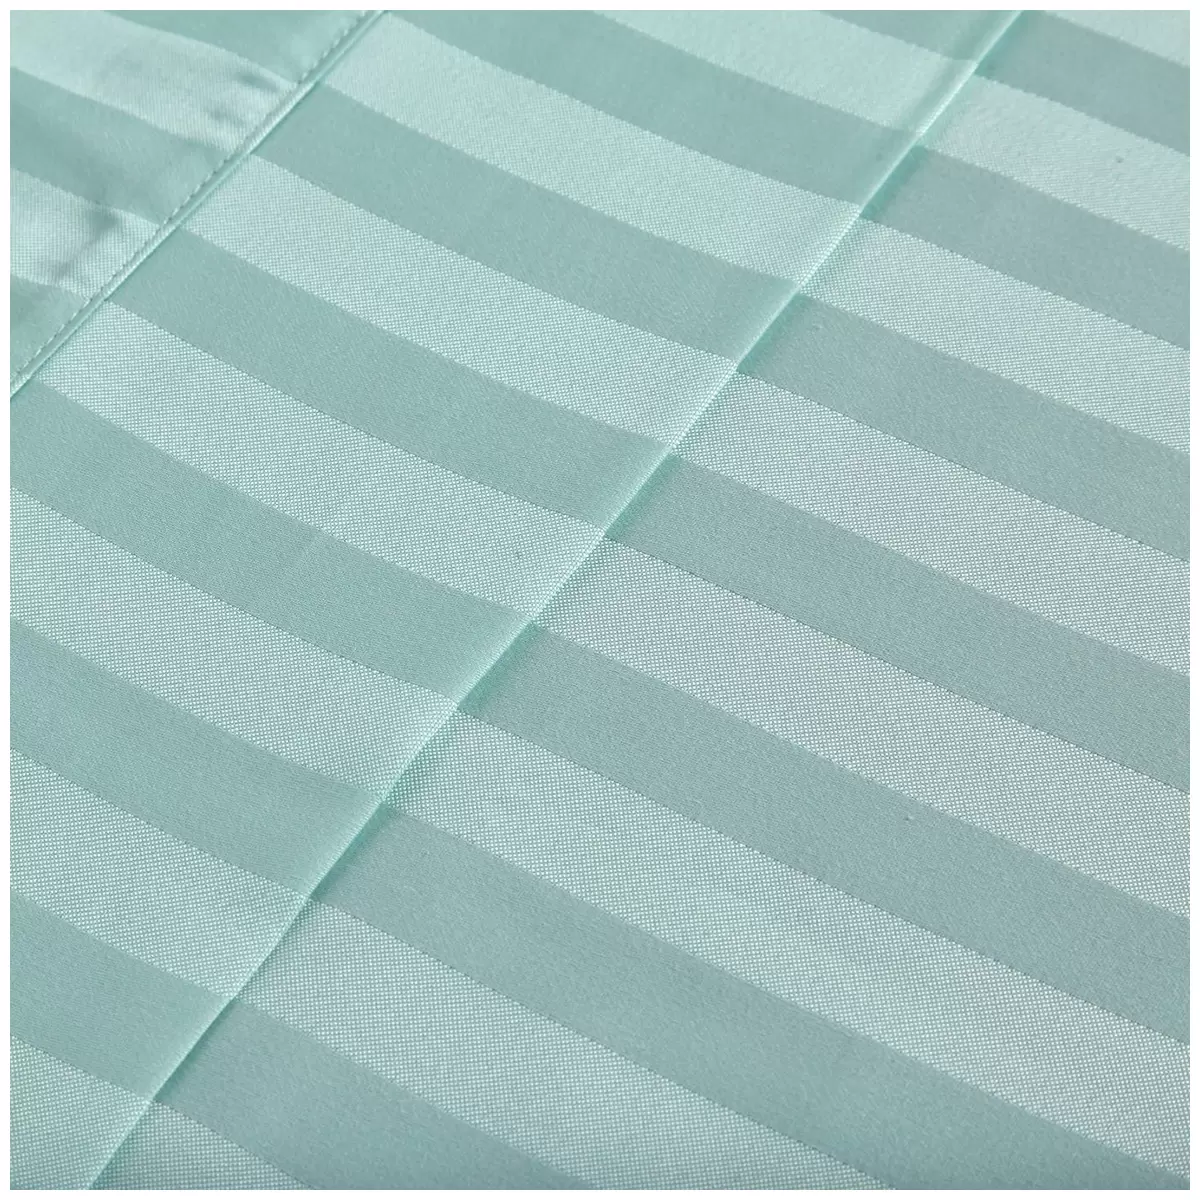 Bdirect Royal Comfort 1200 Thread Count Damask Stripe Cotton Blend Sheet Set - King - Mist